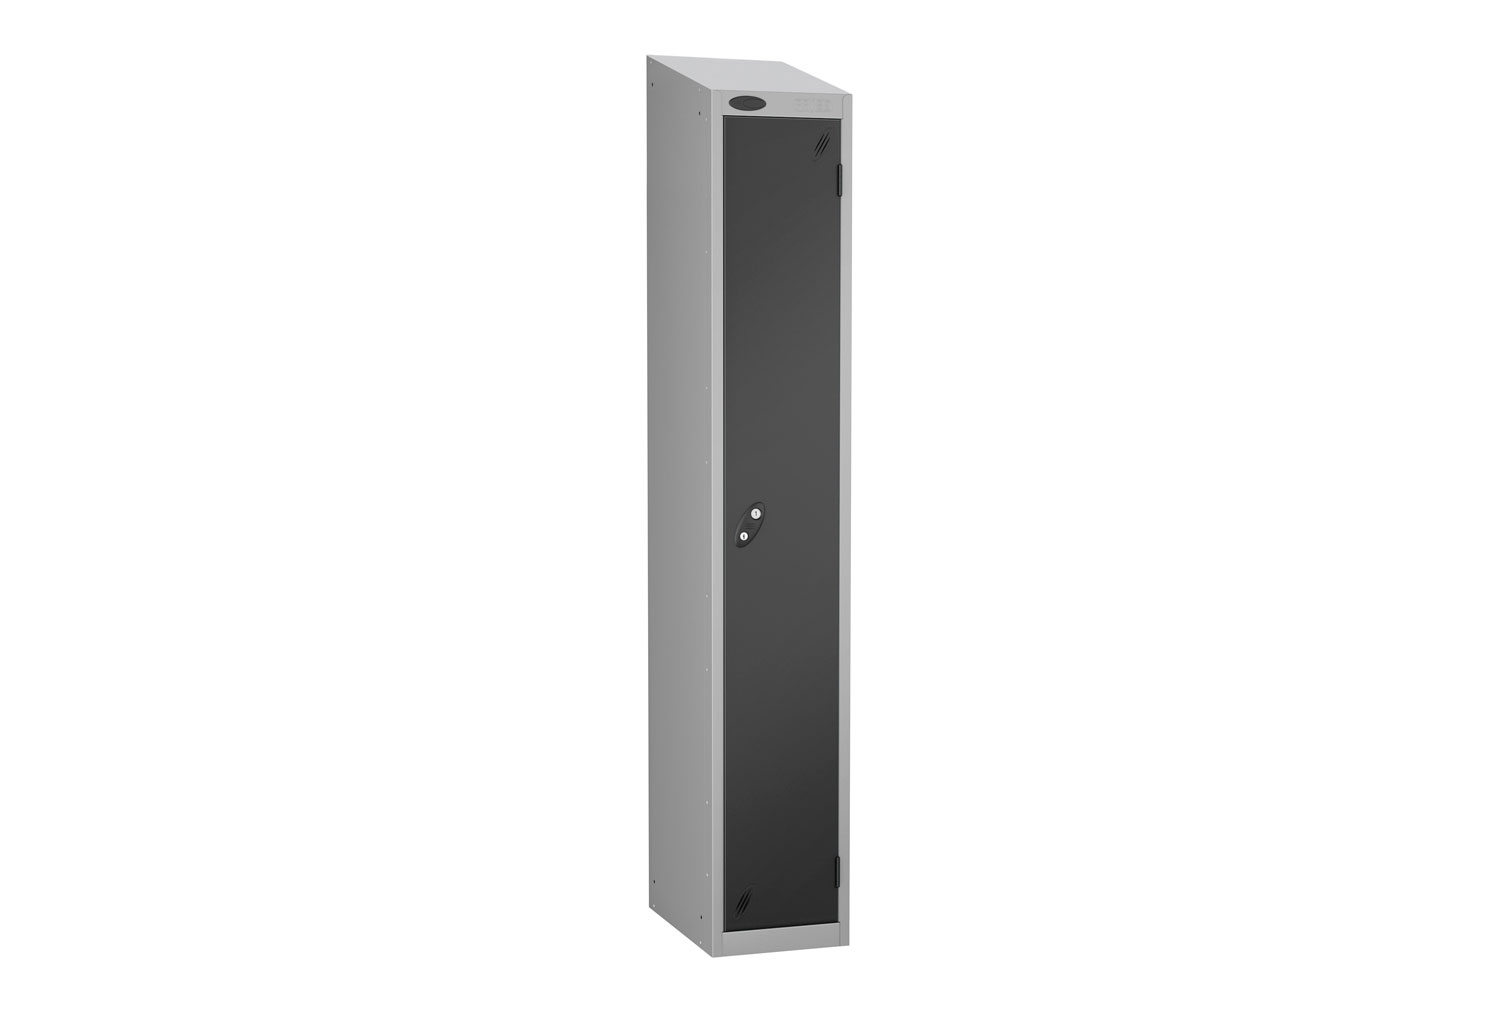 Probe Everyday 1 Door Locker With Sloping Top, 31wx46dx193h (cm), Hasp Lock, Silver Body, Black